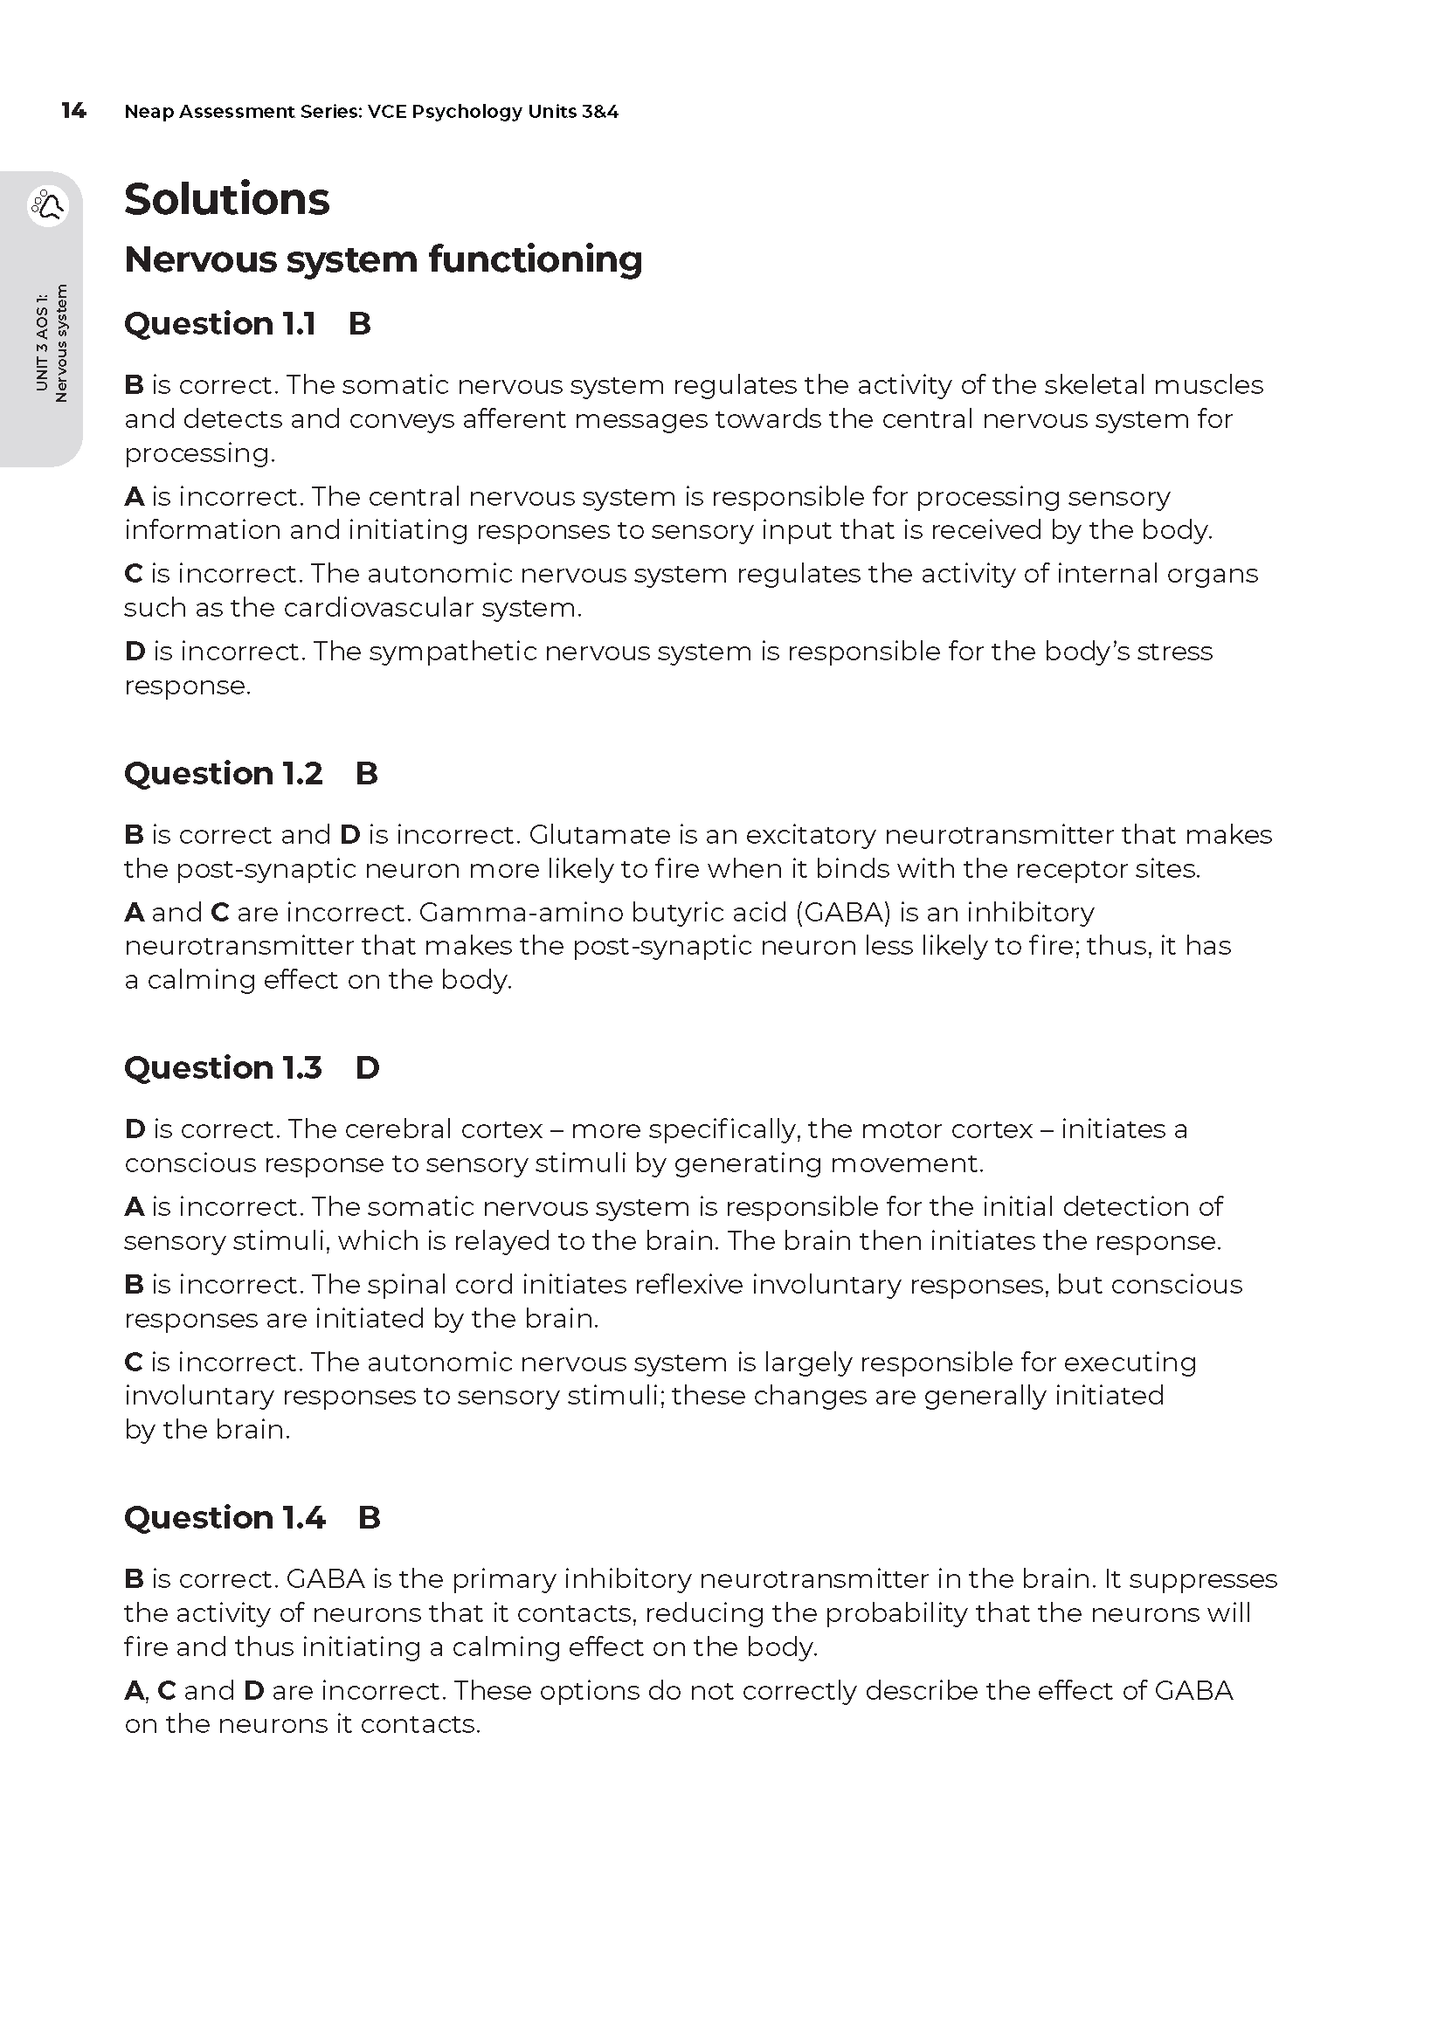 Neap Assessment Series: VCE Psychology Units 3&4